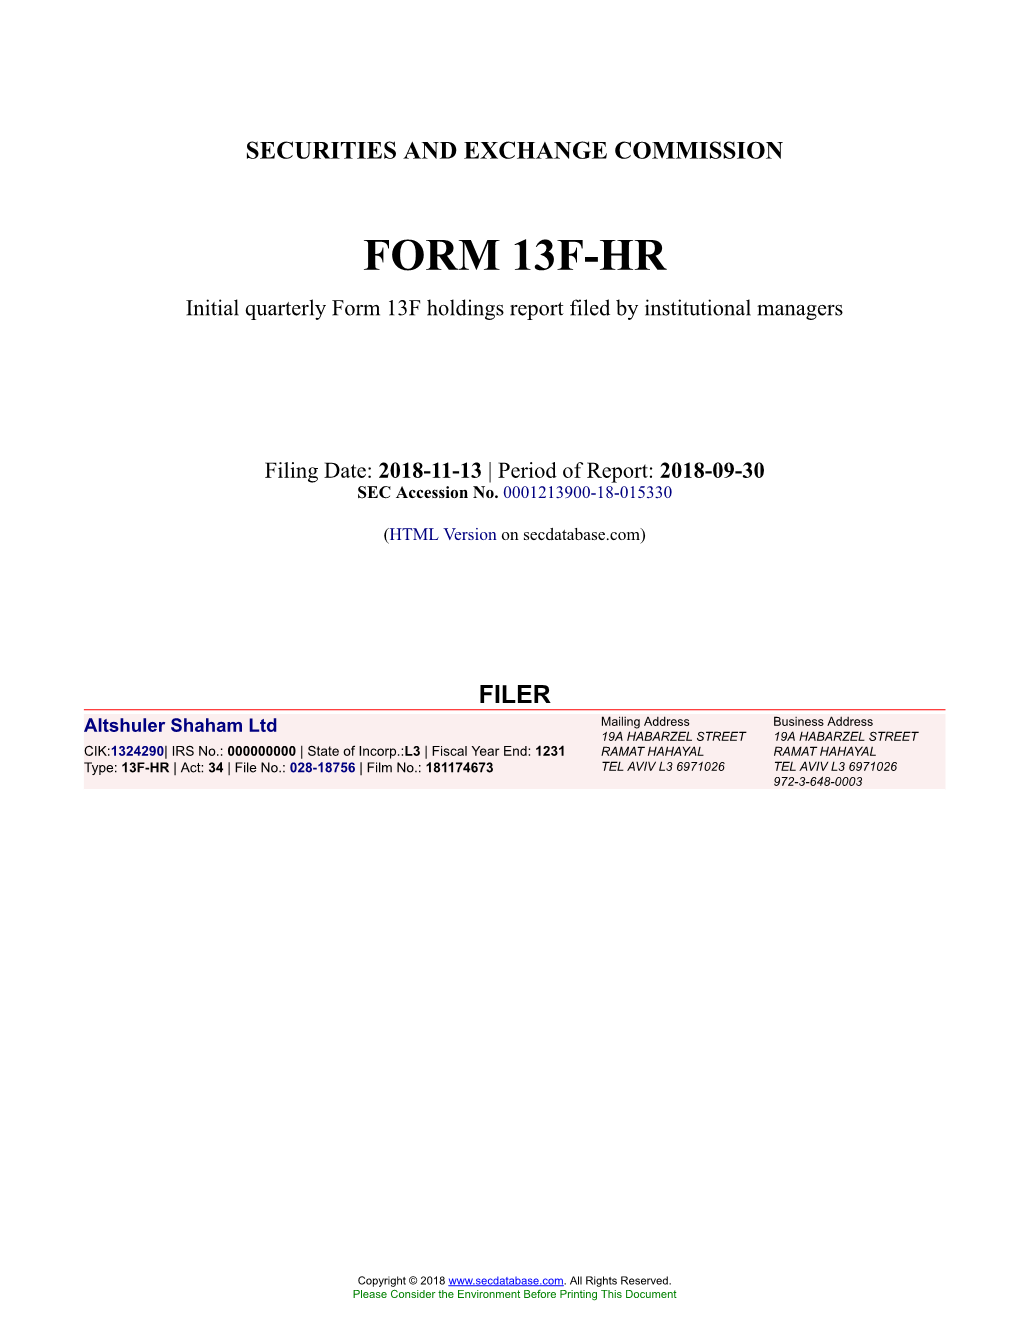 Altshuler Shaham Ltd Form 13F-HR Filed 2018-11-13